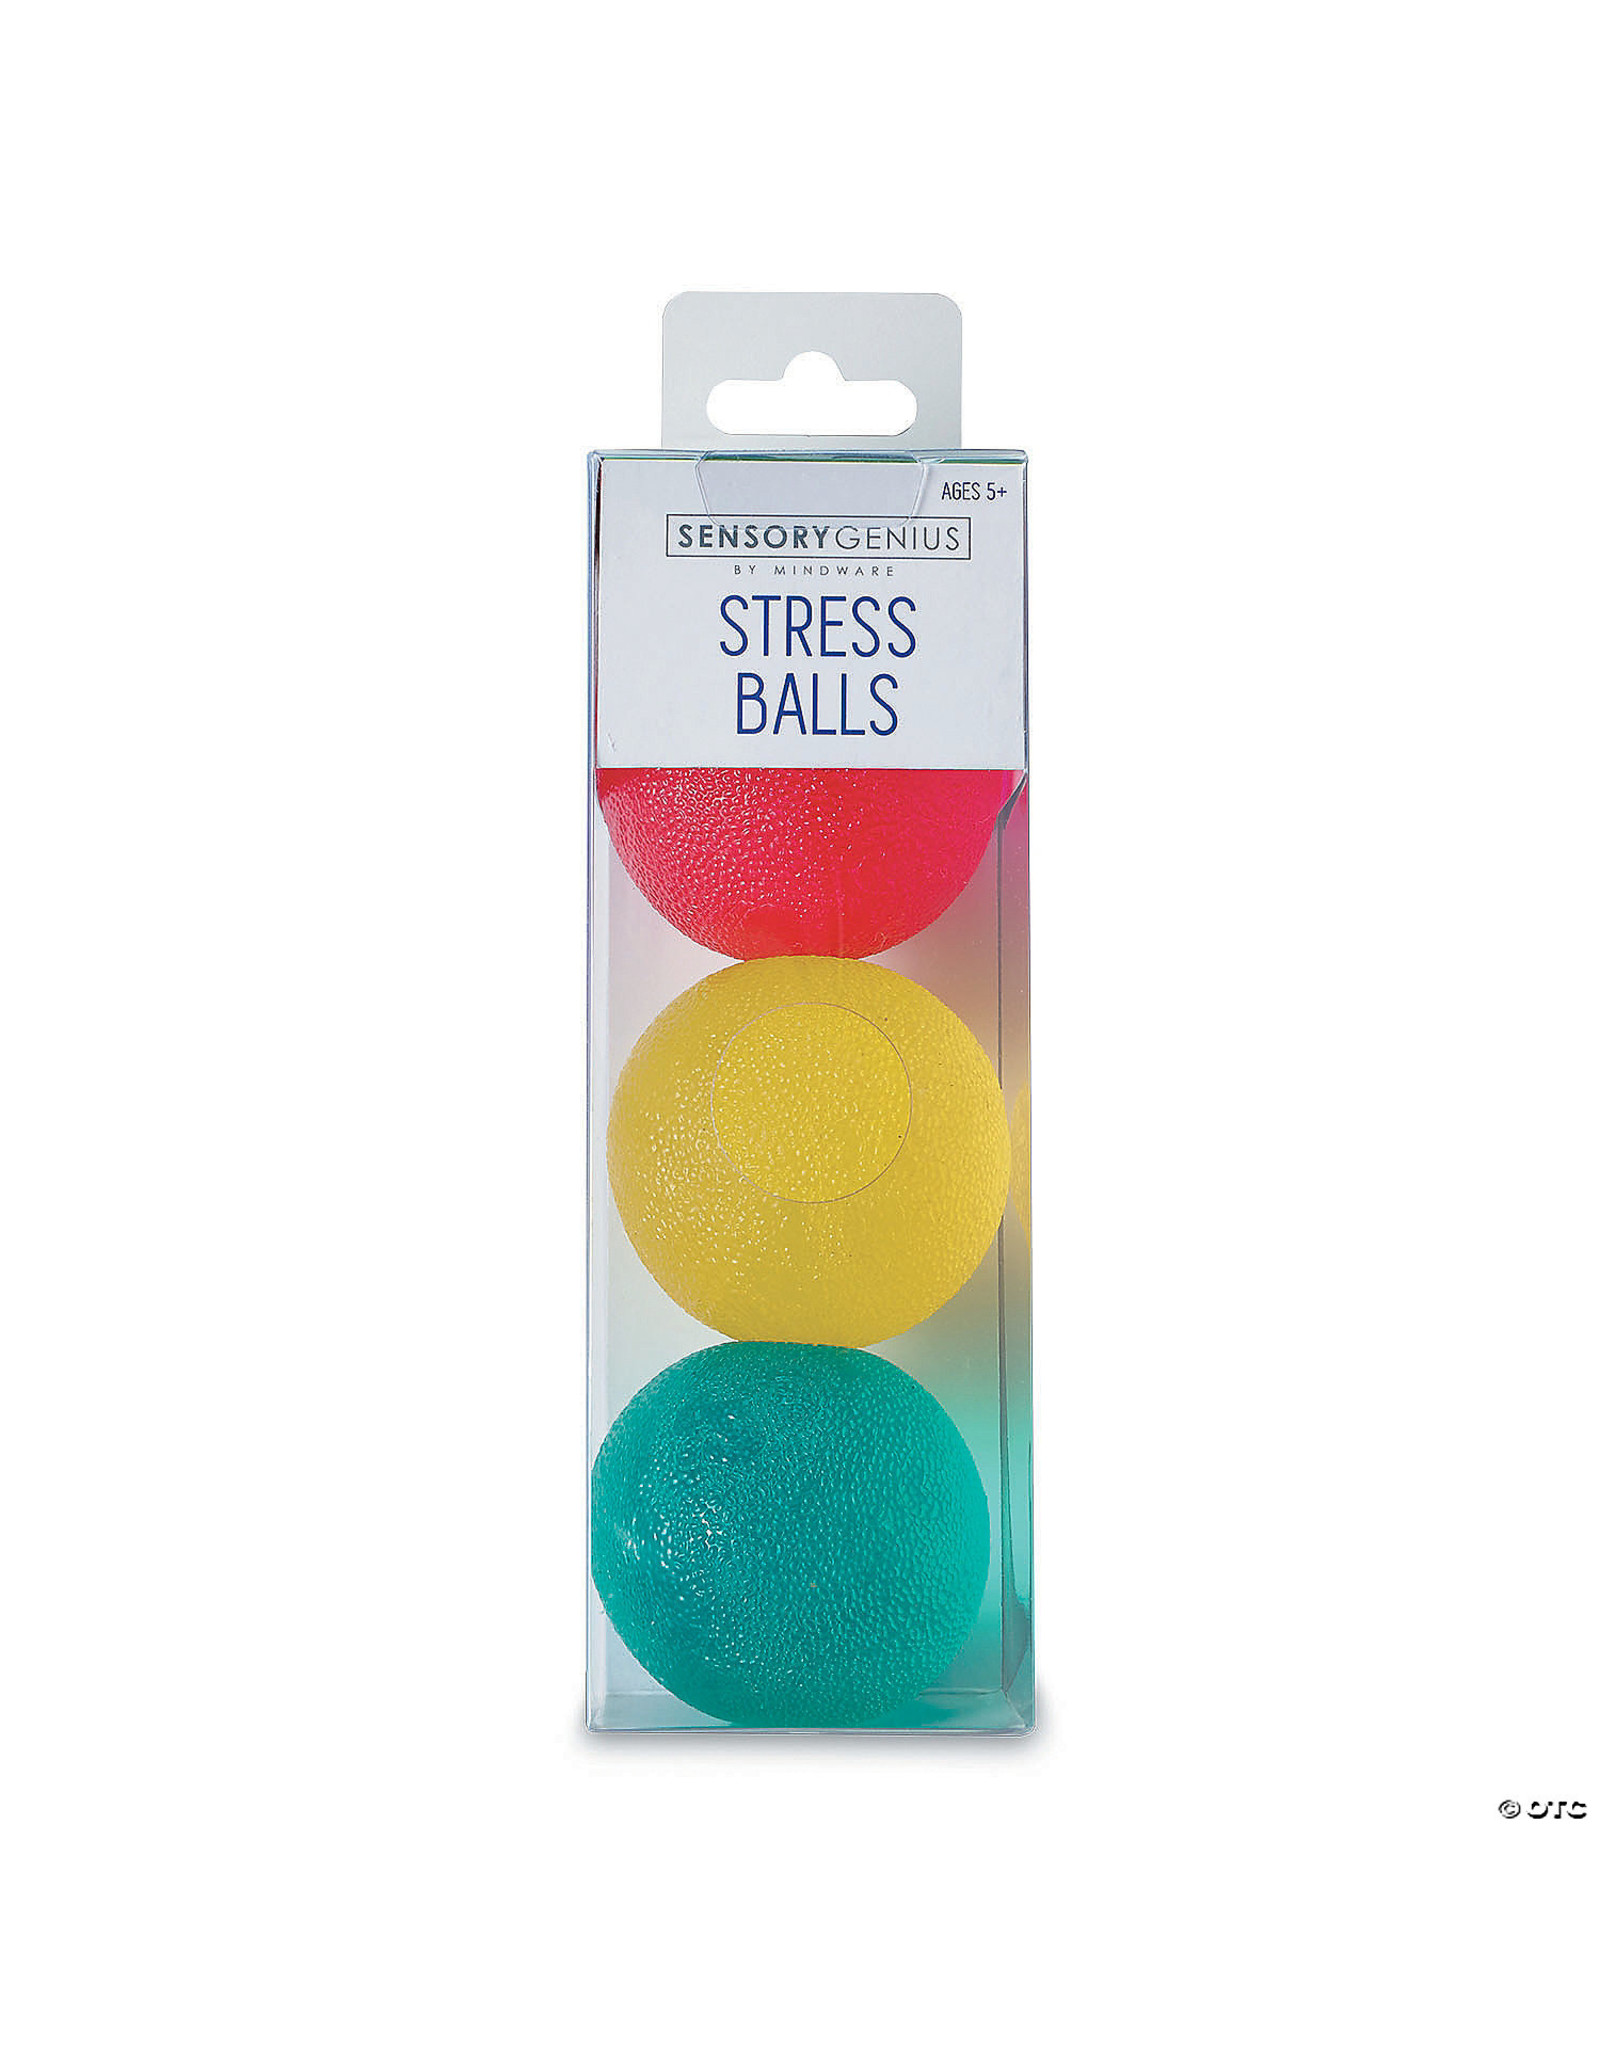 Mindware Stress Balls (Sensory Genius)